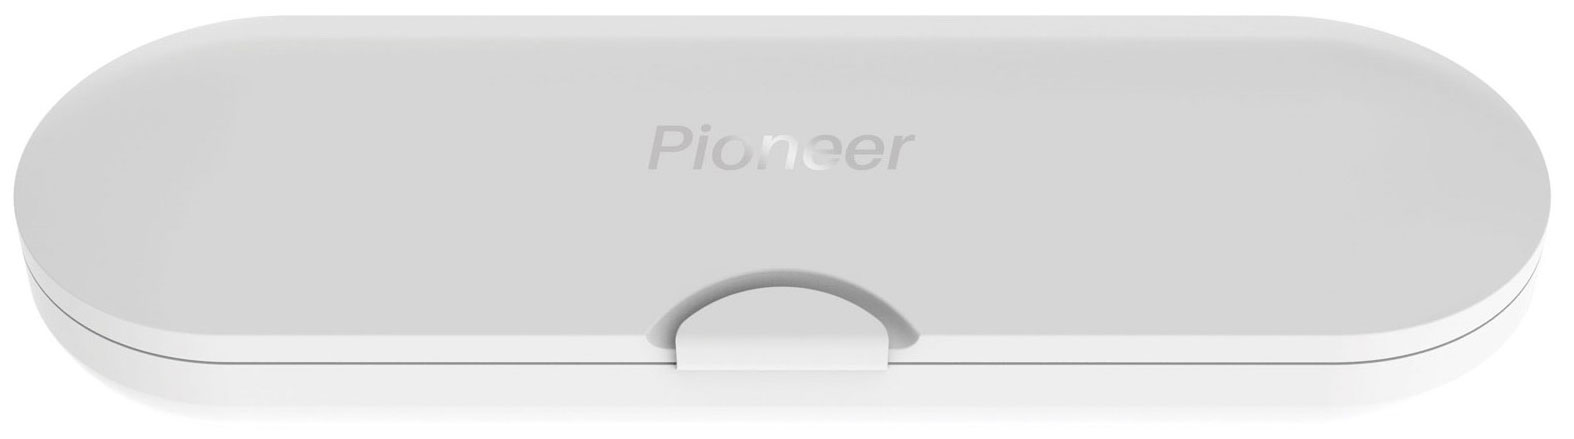 Зубная щетка Pioneer TB-5020 зубная щетка pioneer tb 1020 1 шт